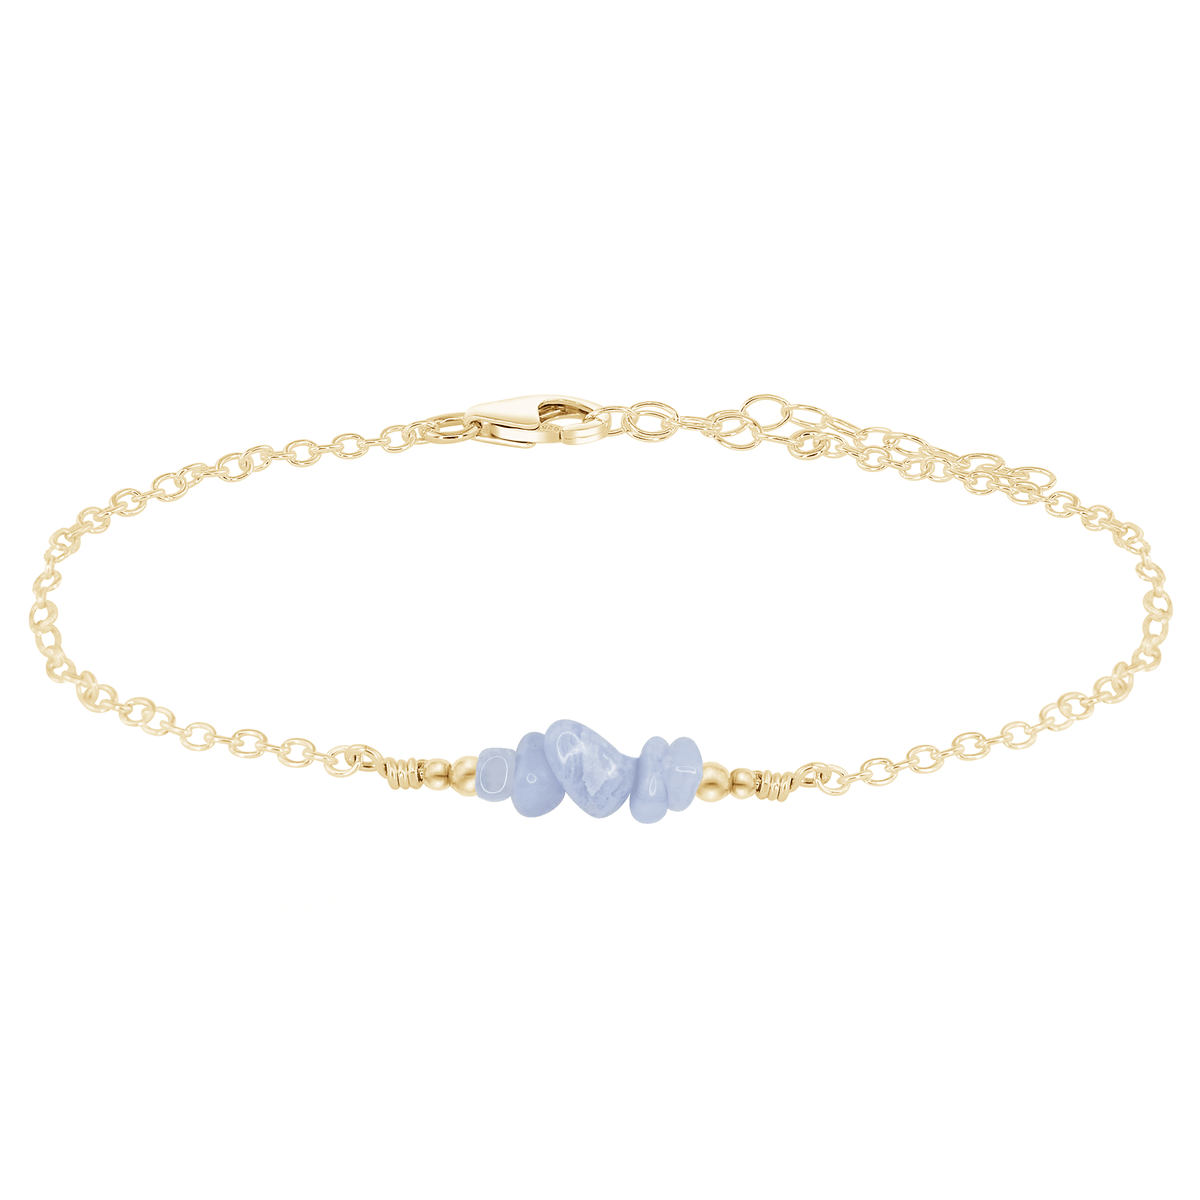 Chip Bead Bar Anklet - Blue Lace Agate - 14K Gold Fill - Luna Tide Handmade Jewellery